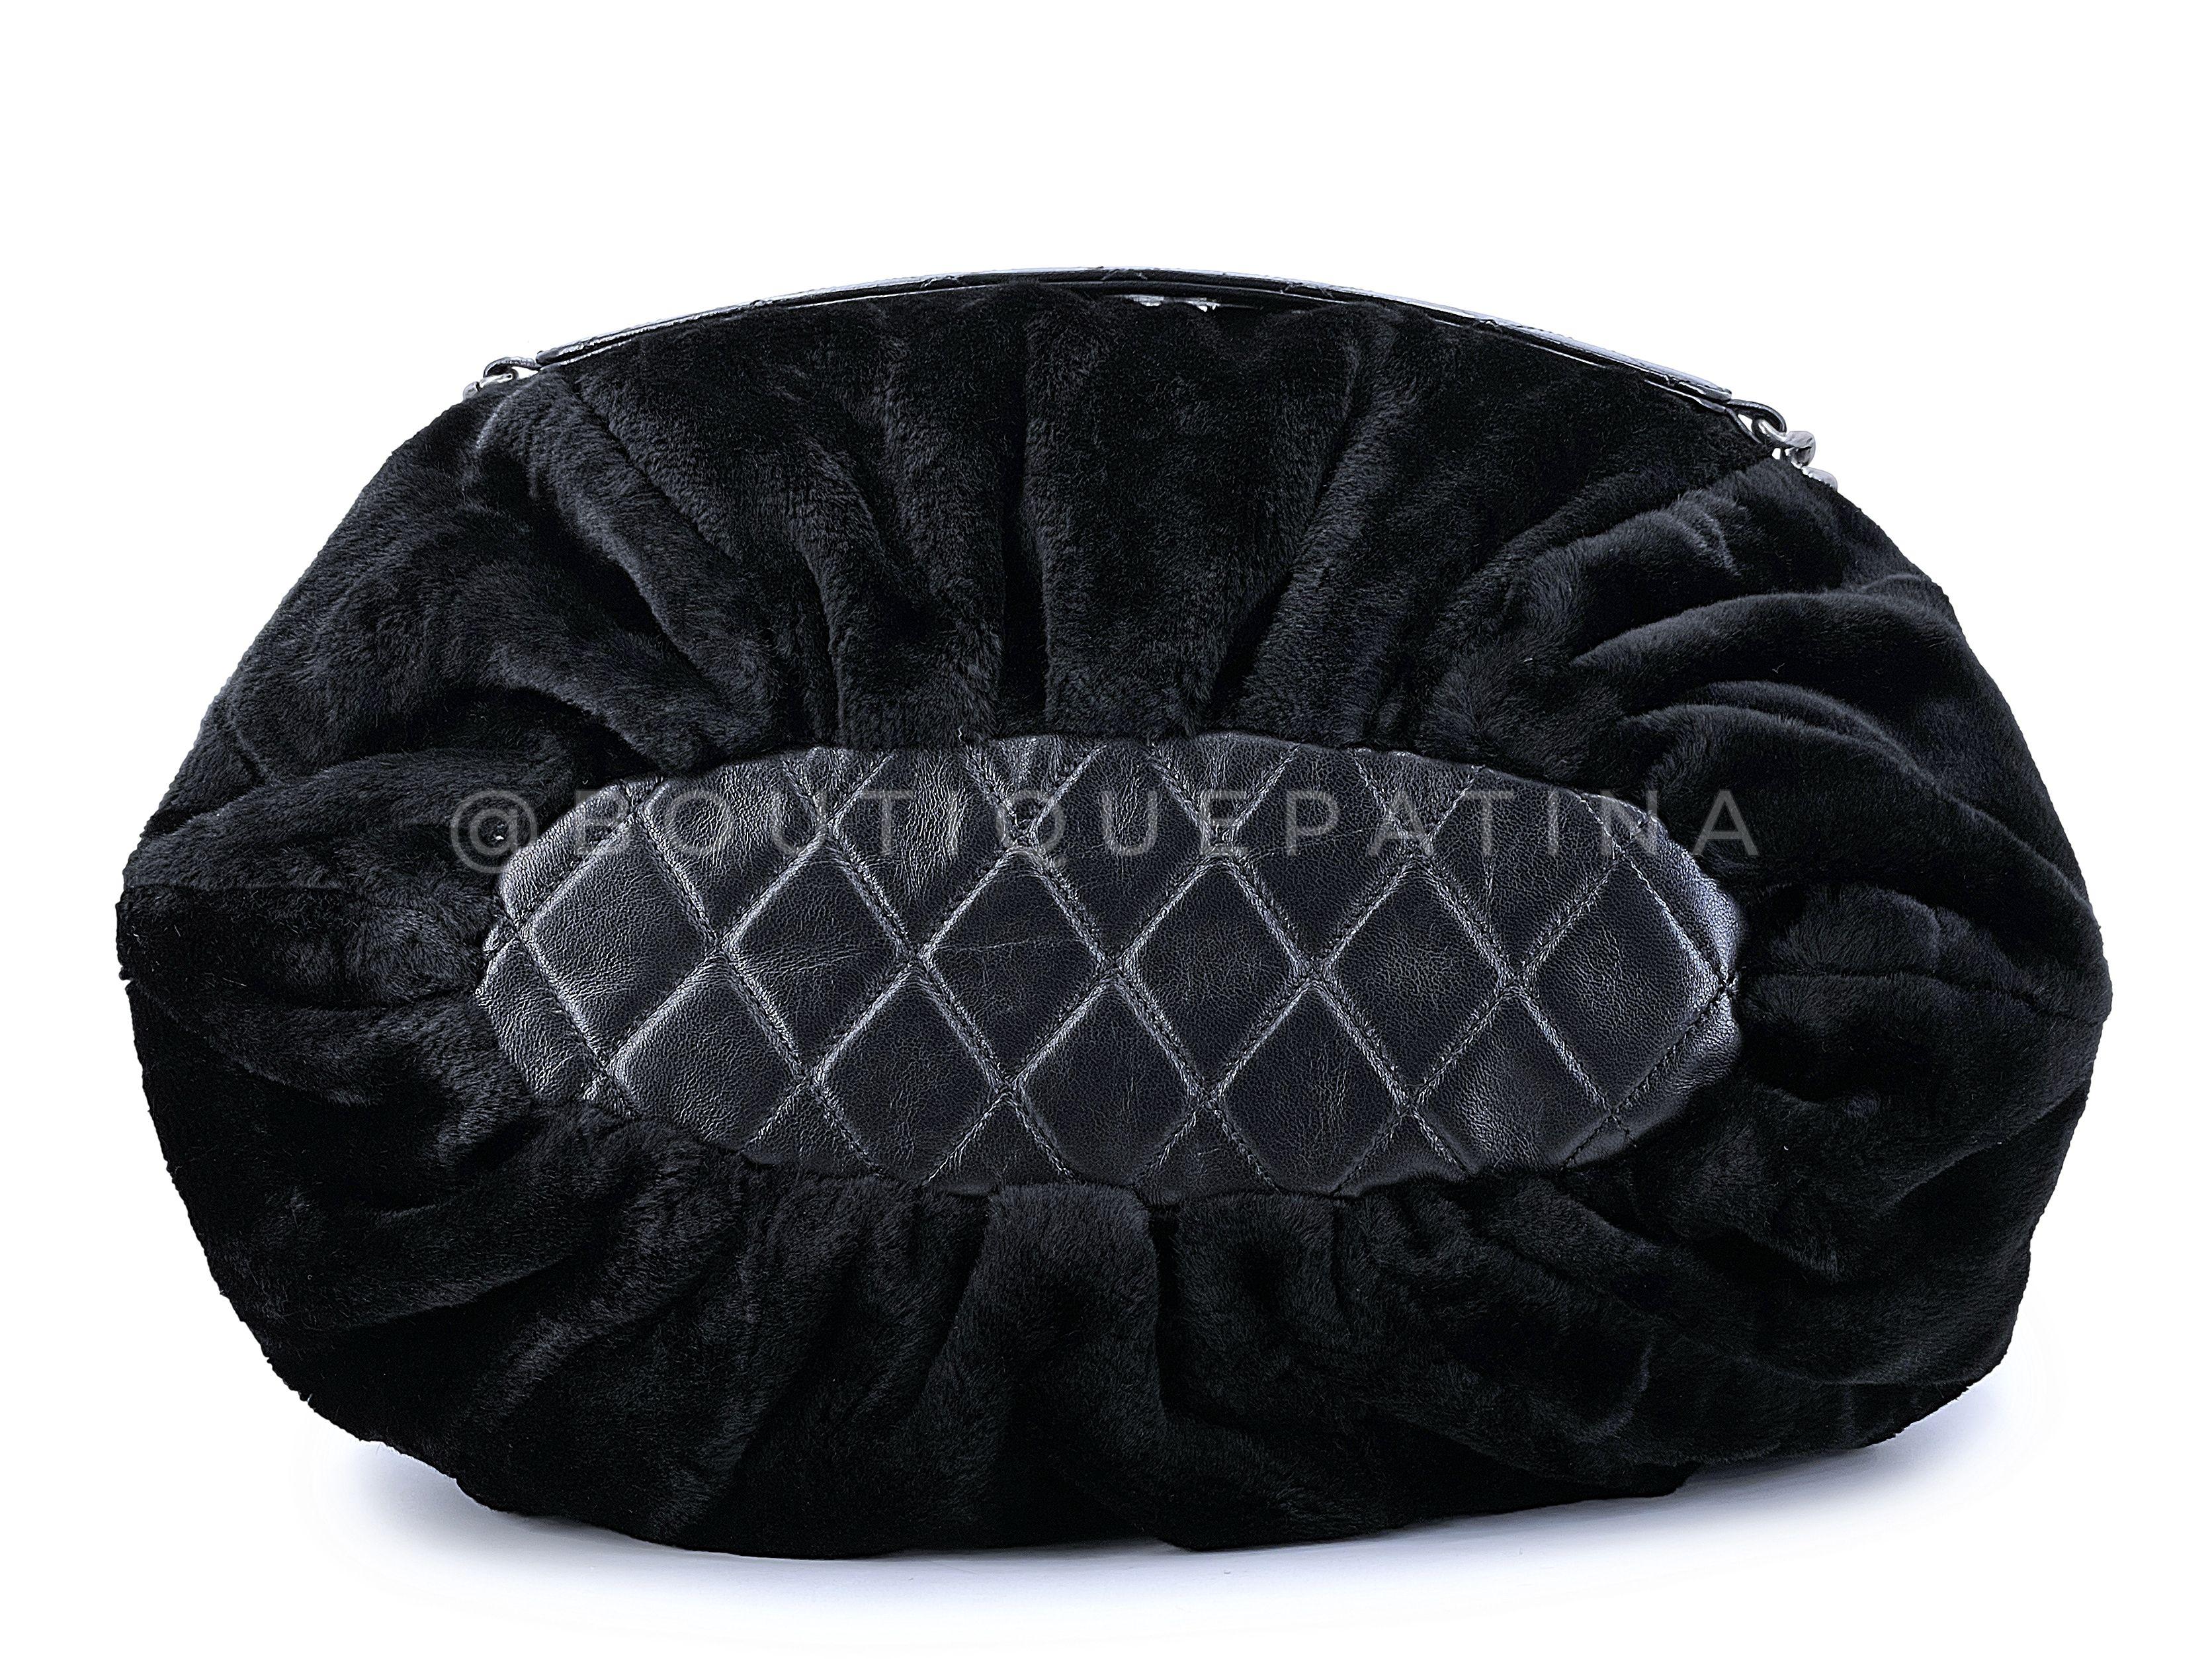 Rare Chanel 2010 Black Logo Fur Hobo Tote Bag SHW 67704 For Sale 1